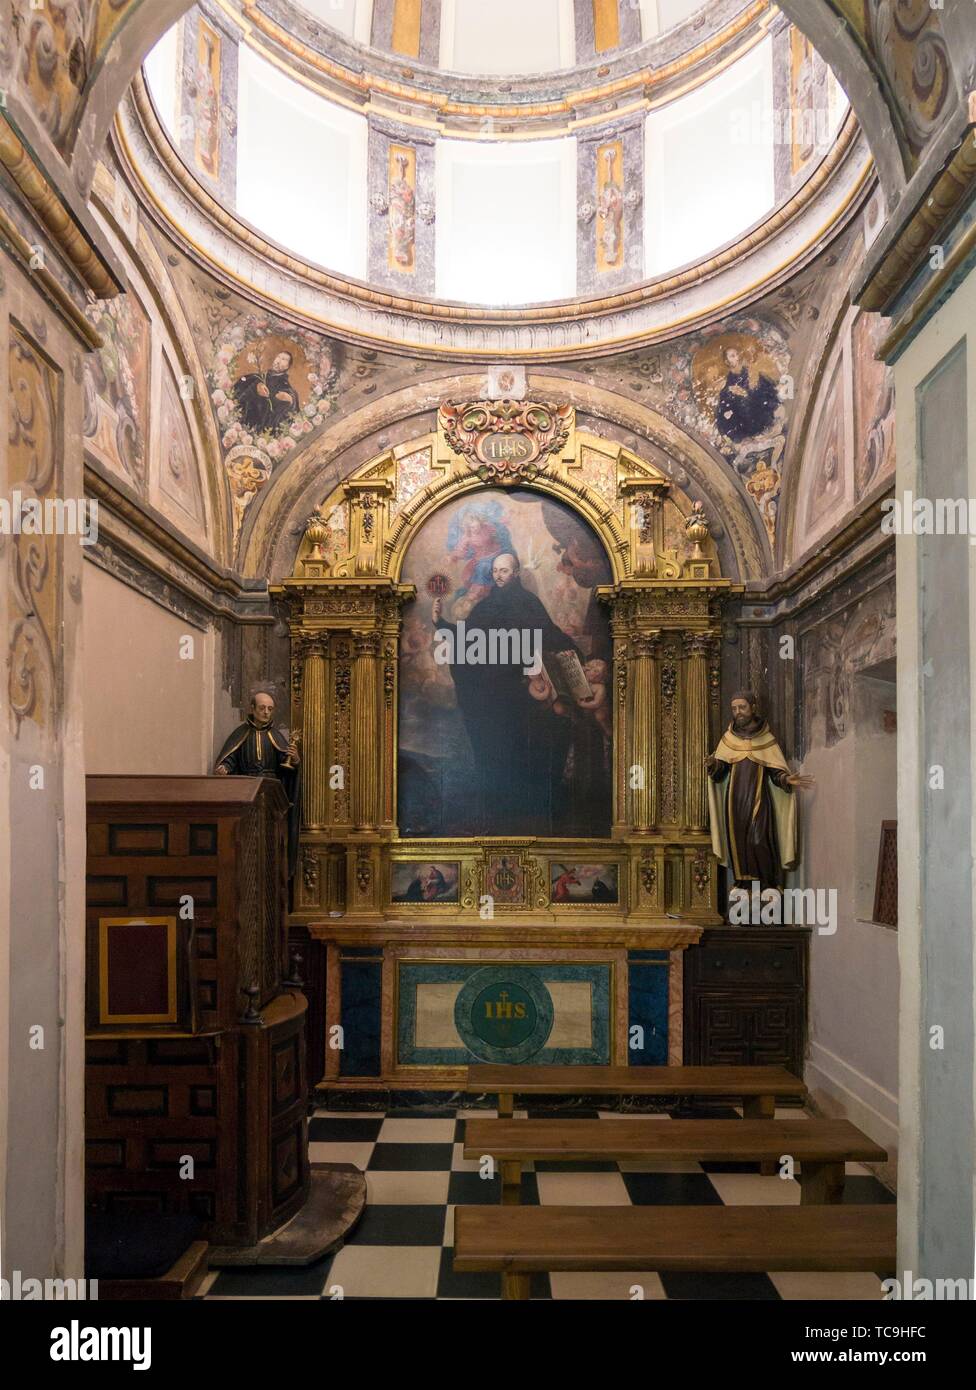 Church of san ignacio de loyola hi-res stock photography and images - Alamy